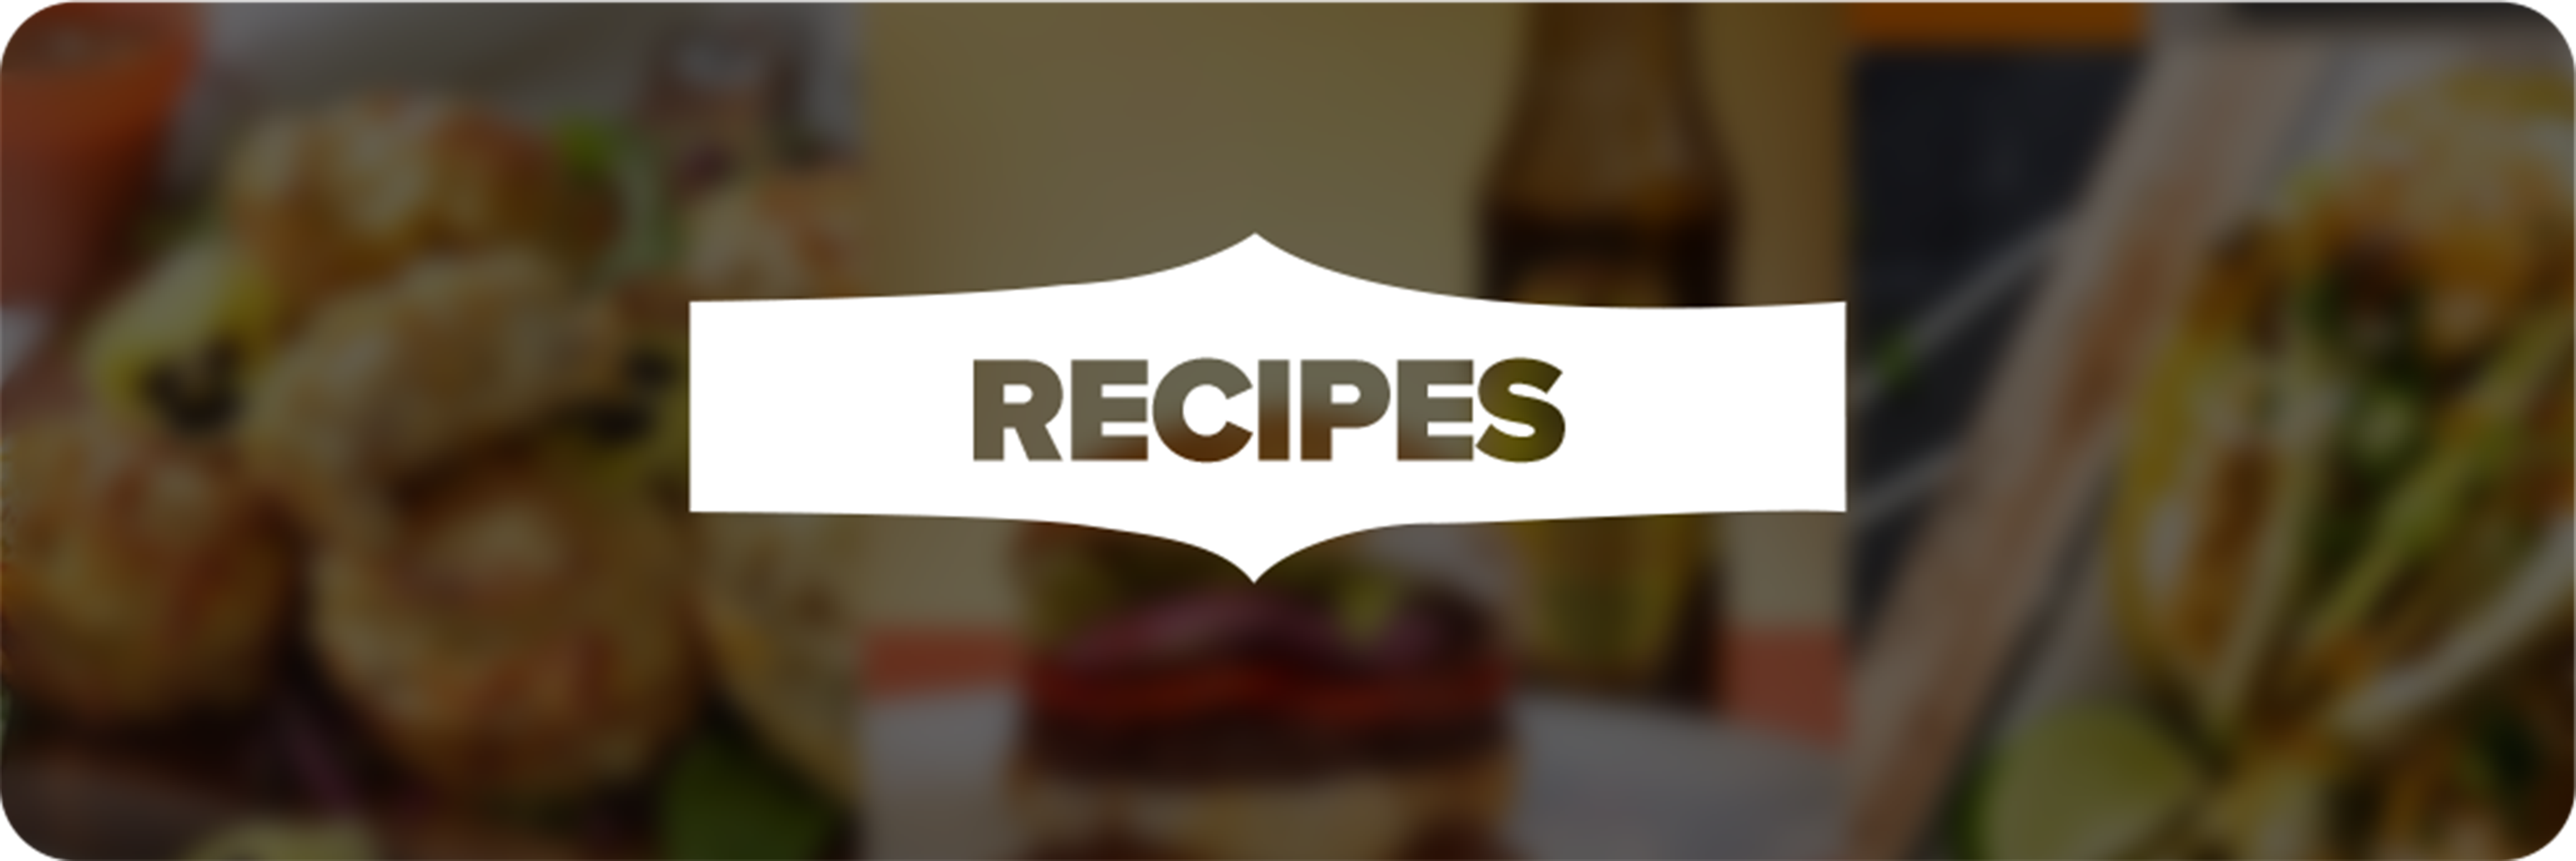 Recipes-Banner